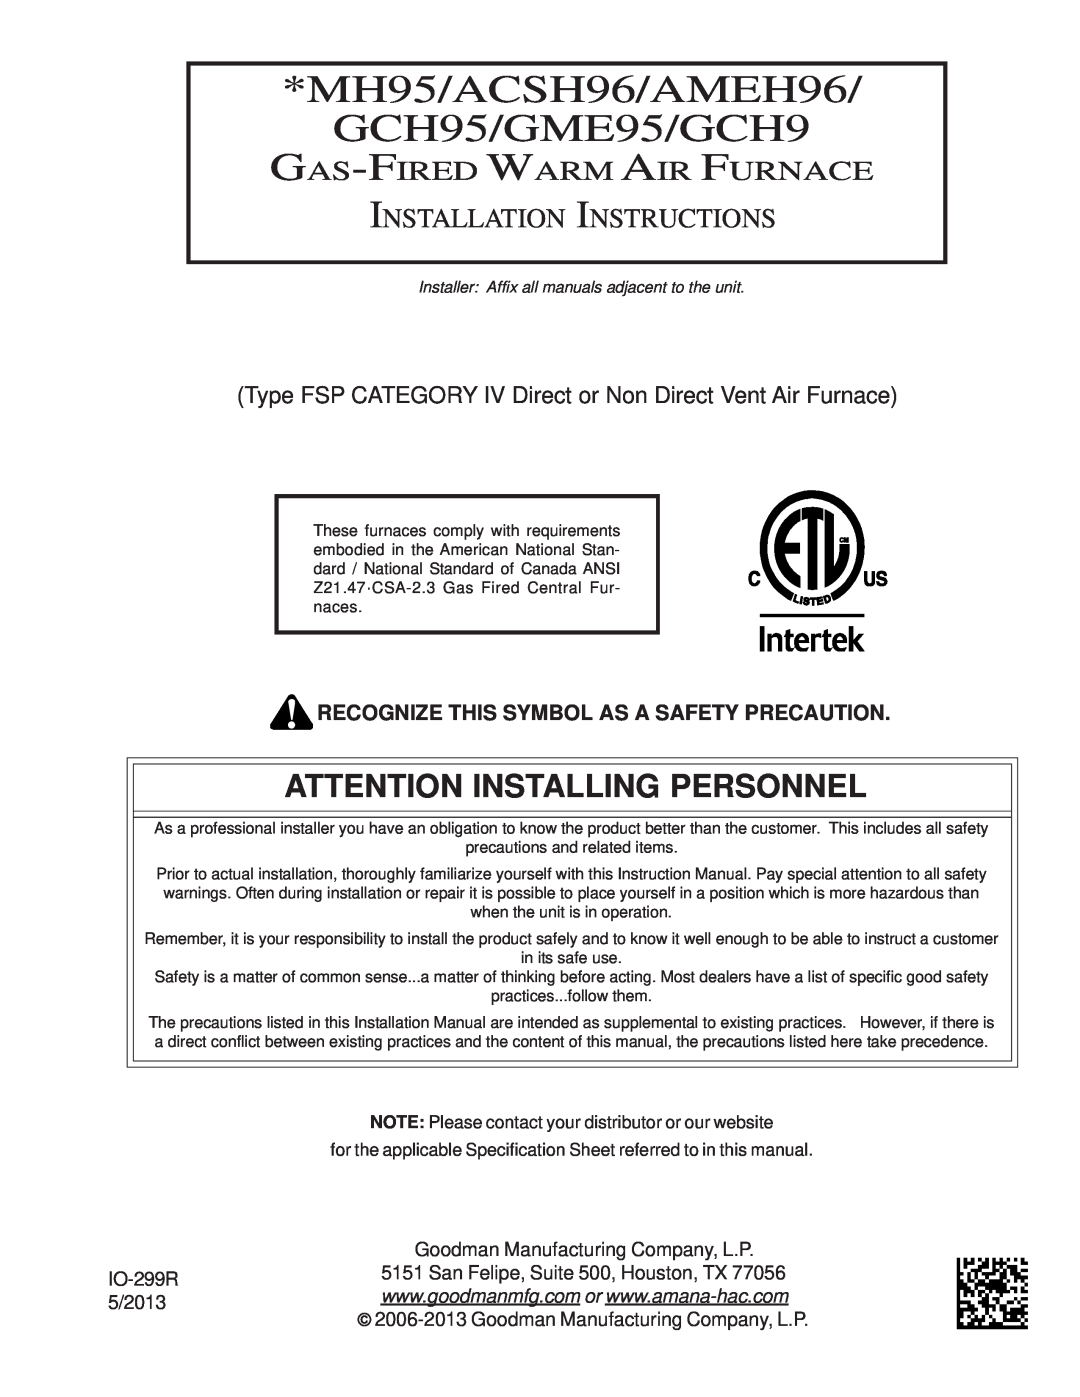 Goodman Mfg GAS-FIRED WARM AIR FURNACE installation instructions MH95/ACSH96/AMEH96 GCH95/GME95/GCH9 